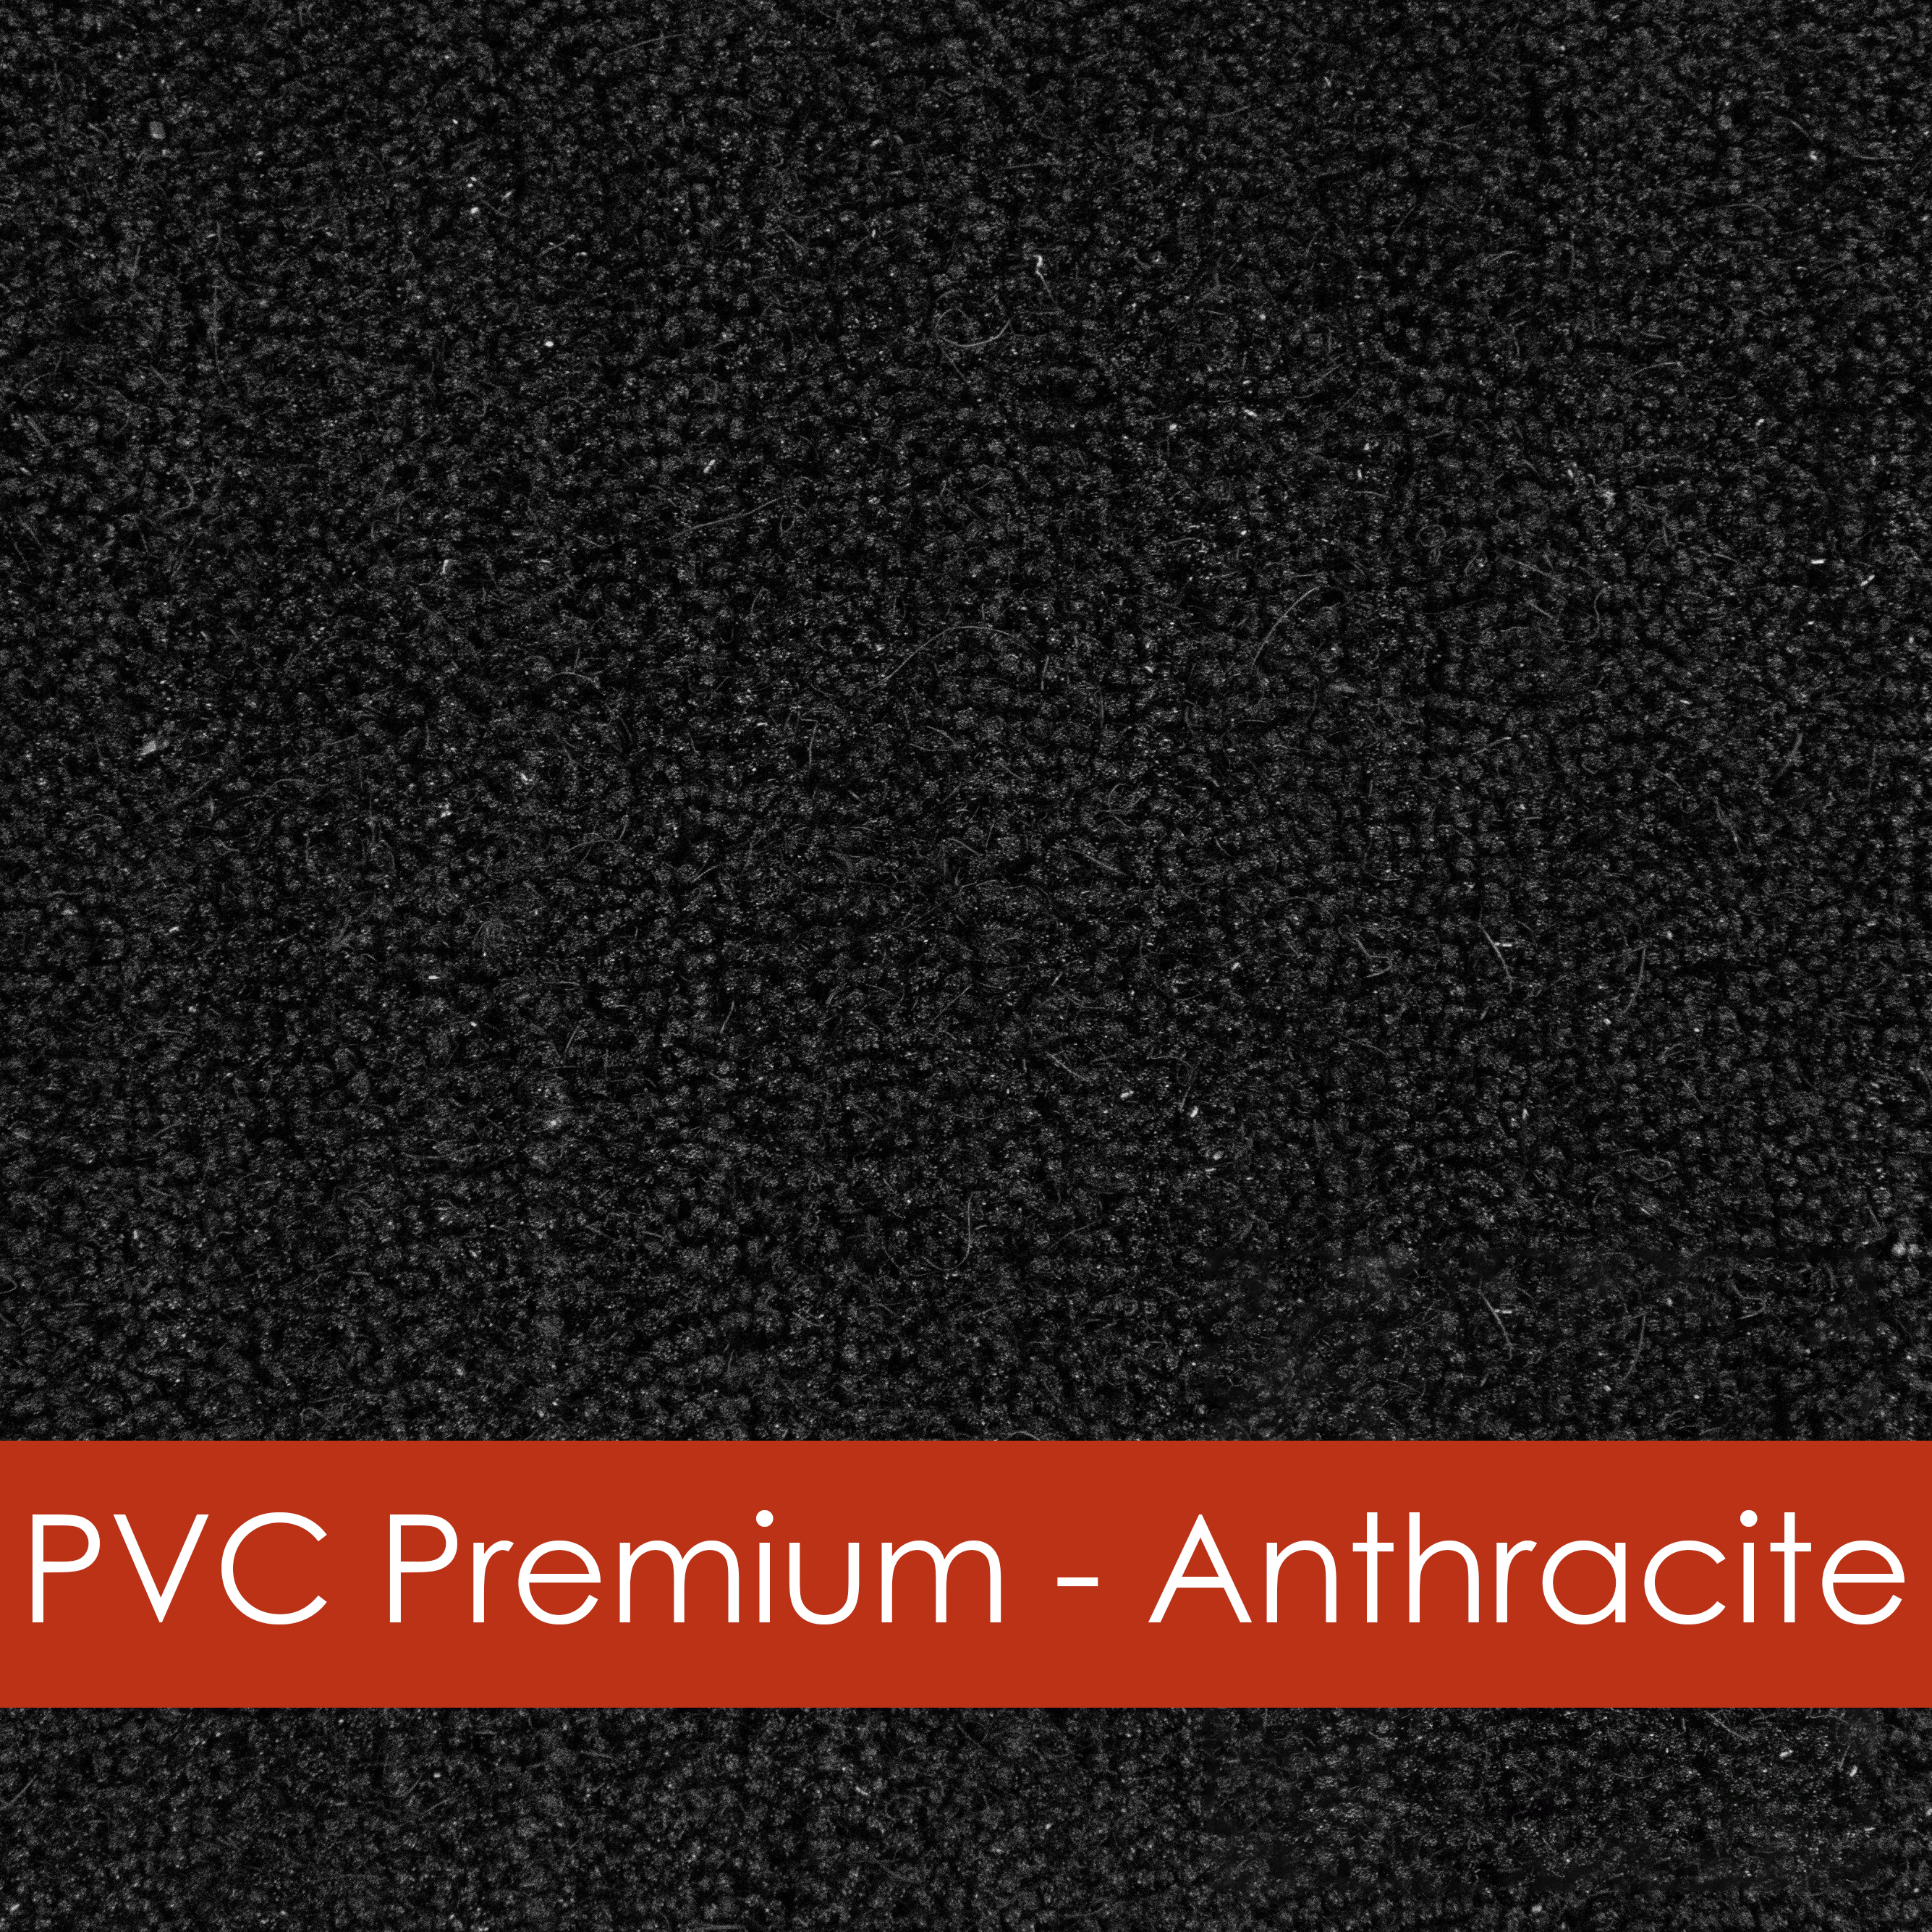 Anthracite PVC backed coir premium grade